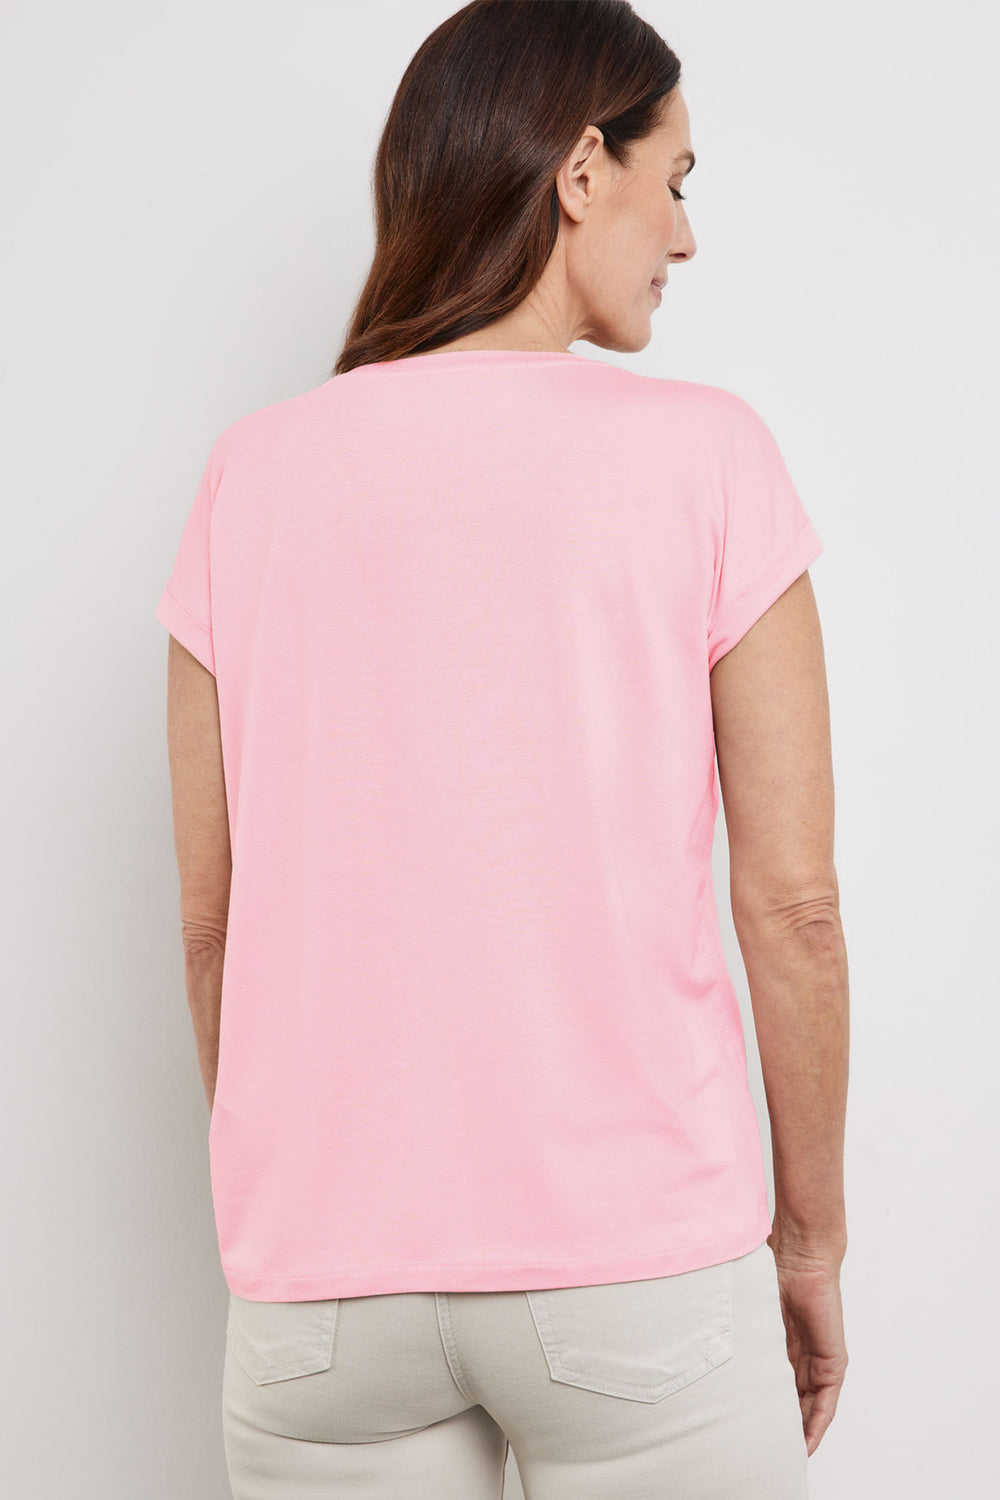 Gerry Weber 270039-44043 Lotus Pink Floral Print T-Shirt - Dotique